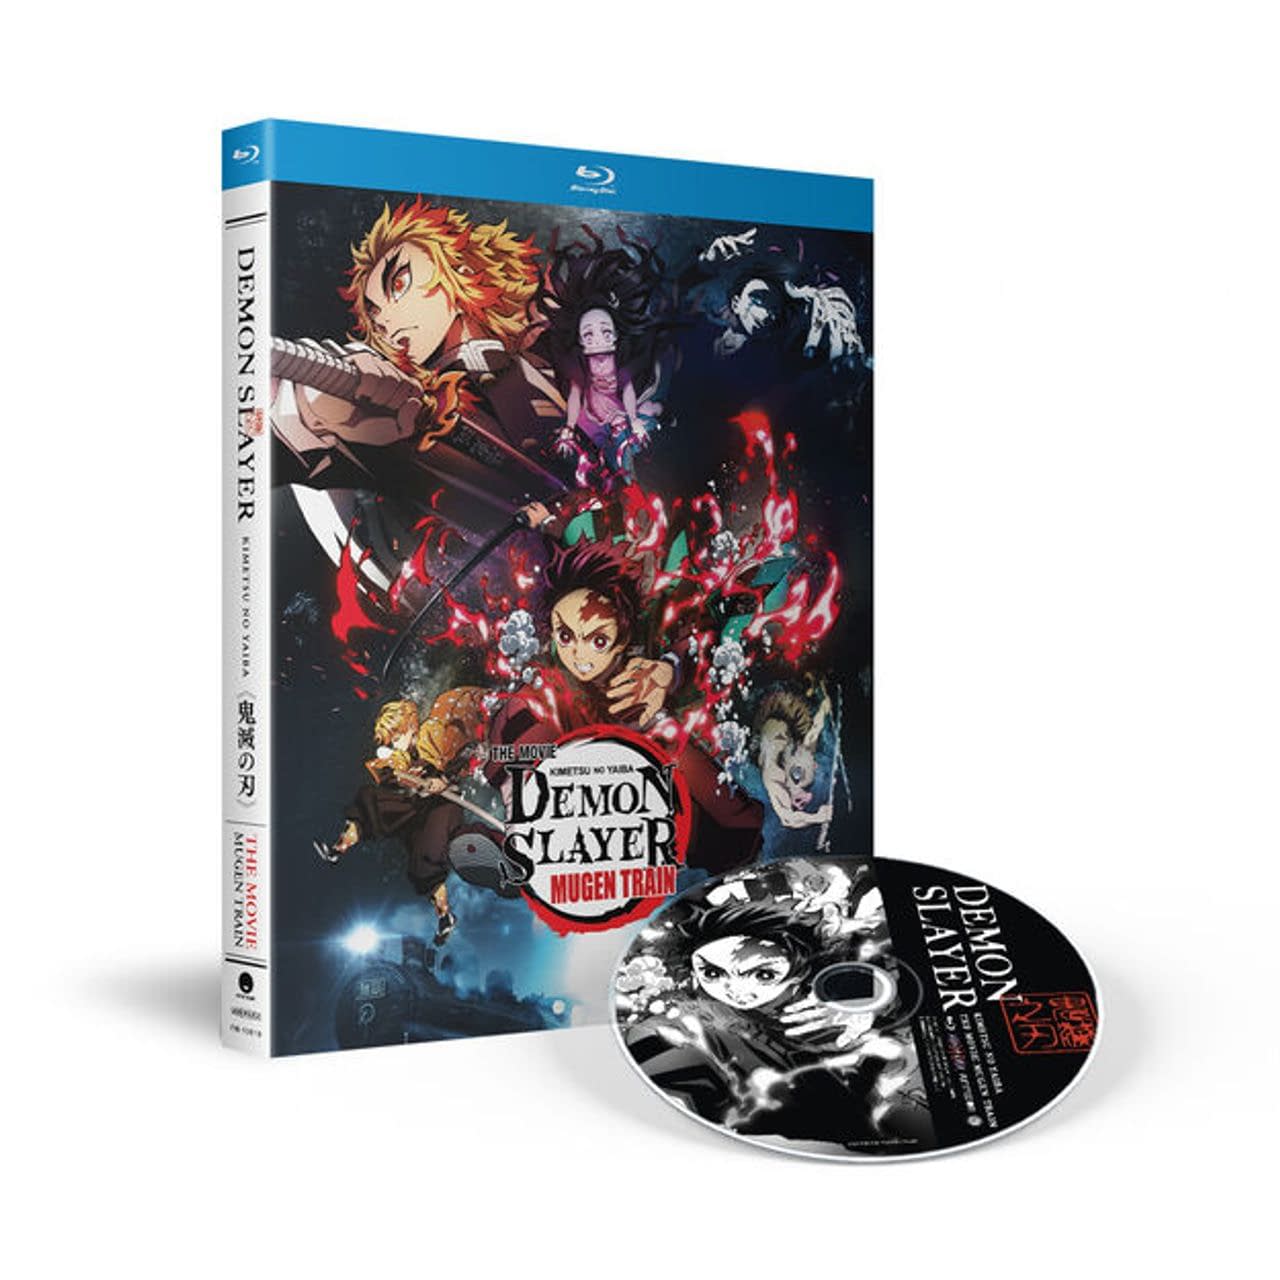 Goblin Slayer - Season 1 (Blu-ray + DVD + Fun Digital Copy +